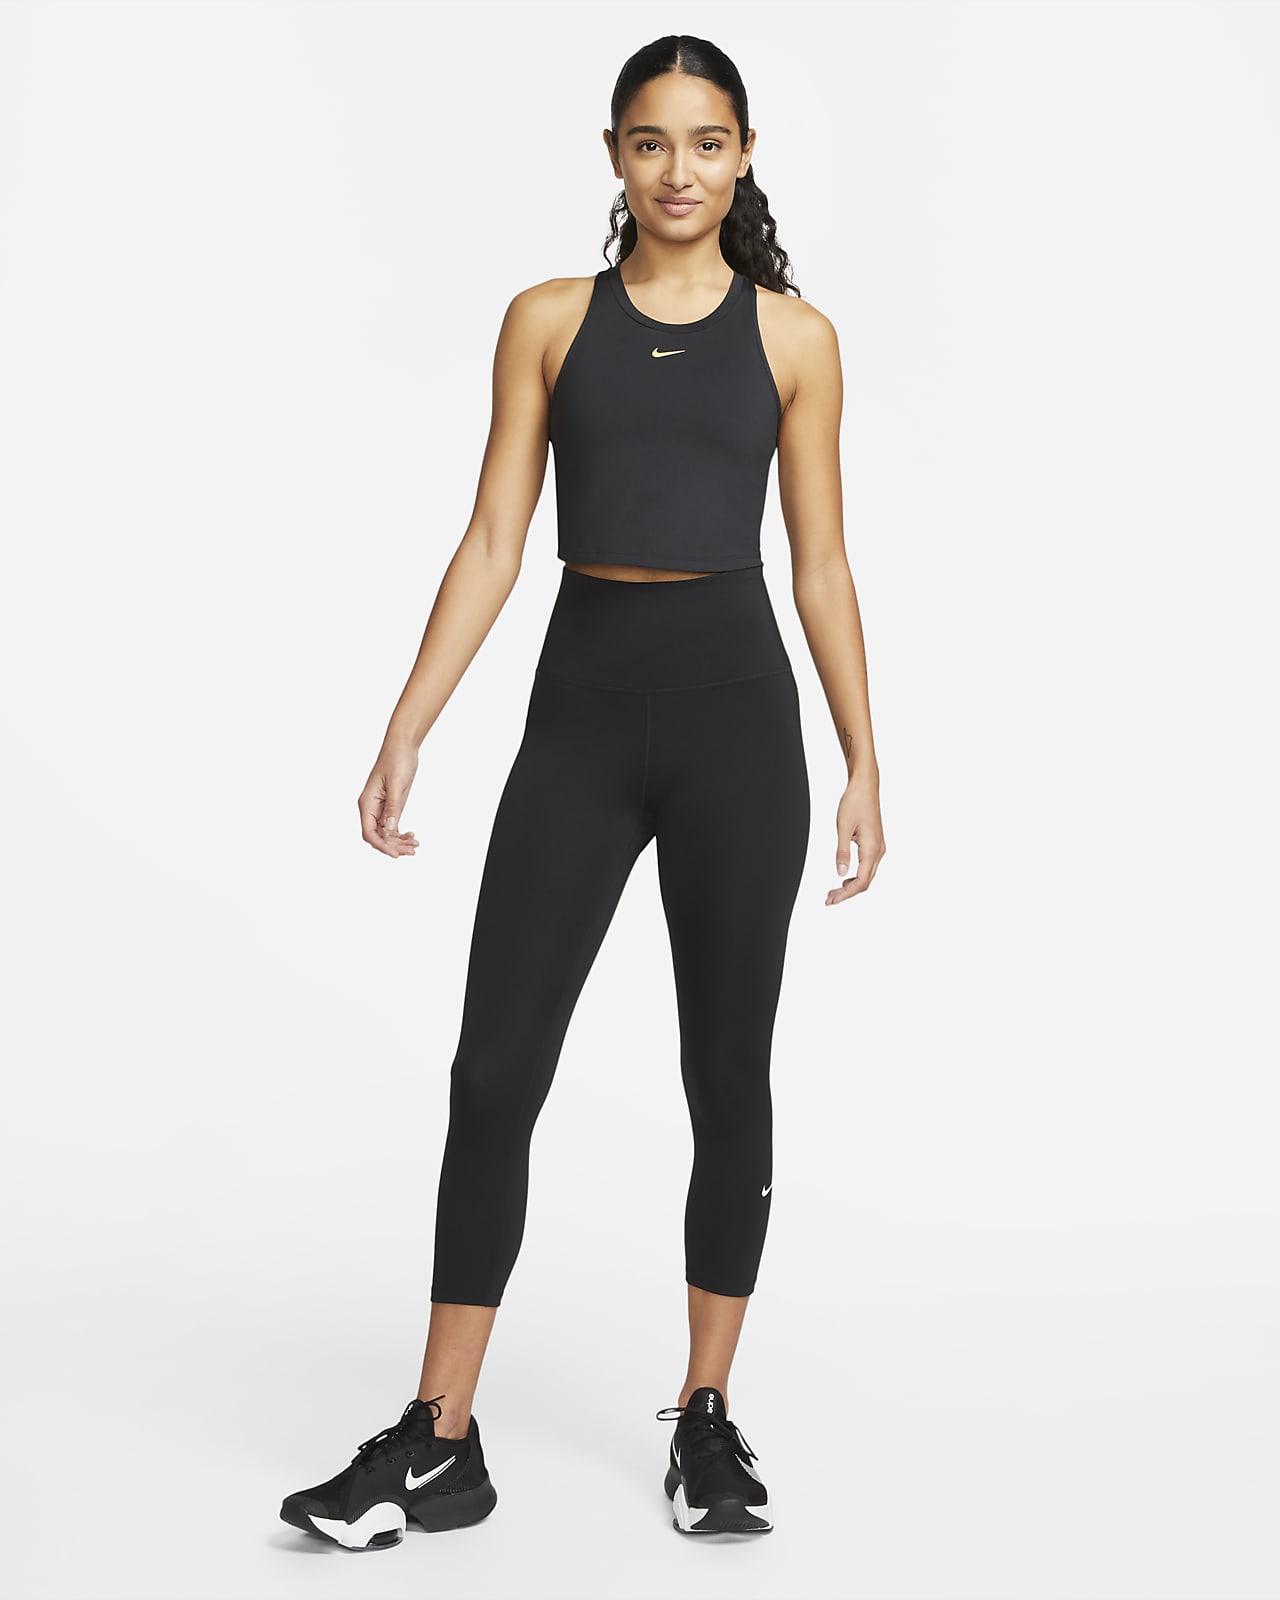 Nike Women's One Luxe 7/8 Laced Legging Purple Smoke CZ9932-531 Size XS